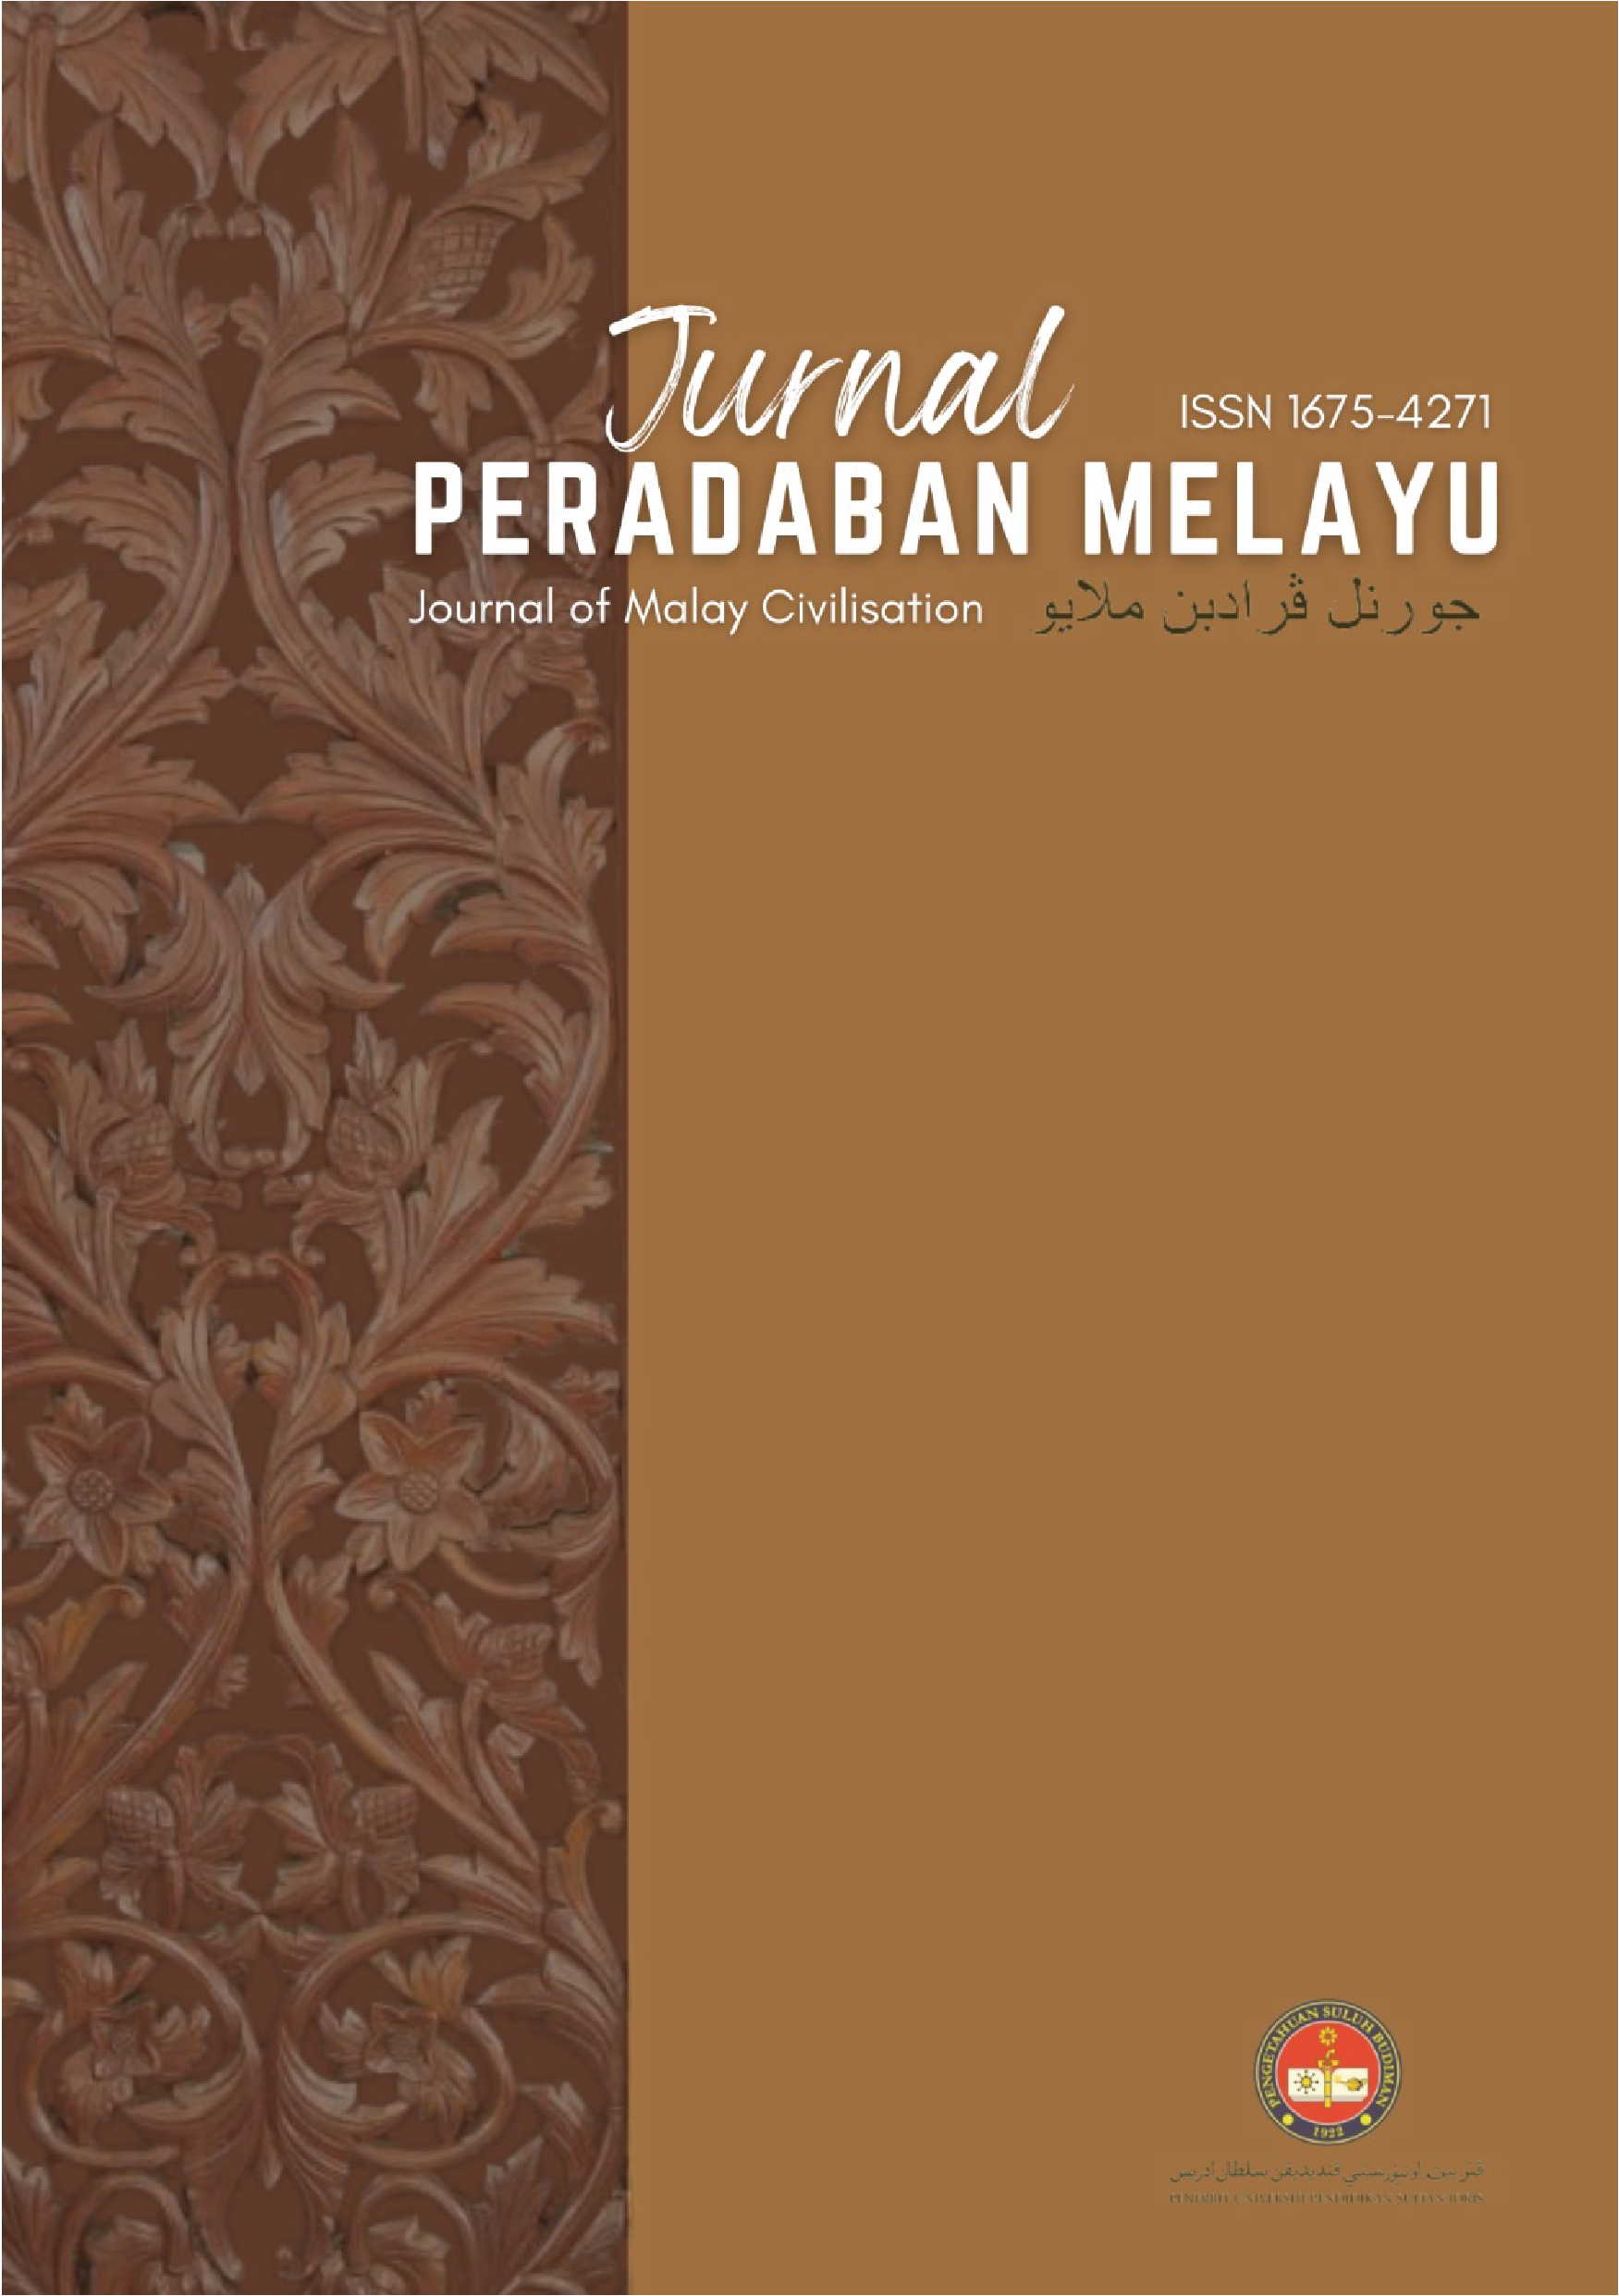 					View Vol. 15 (2020): Jurnal Peradaban Melayu
				